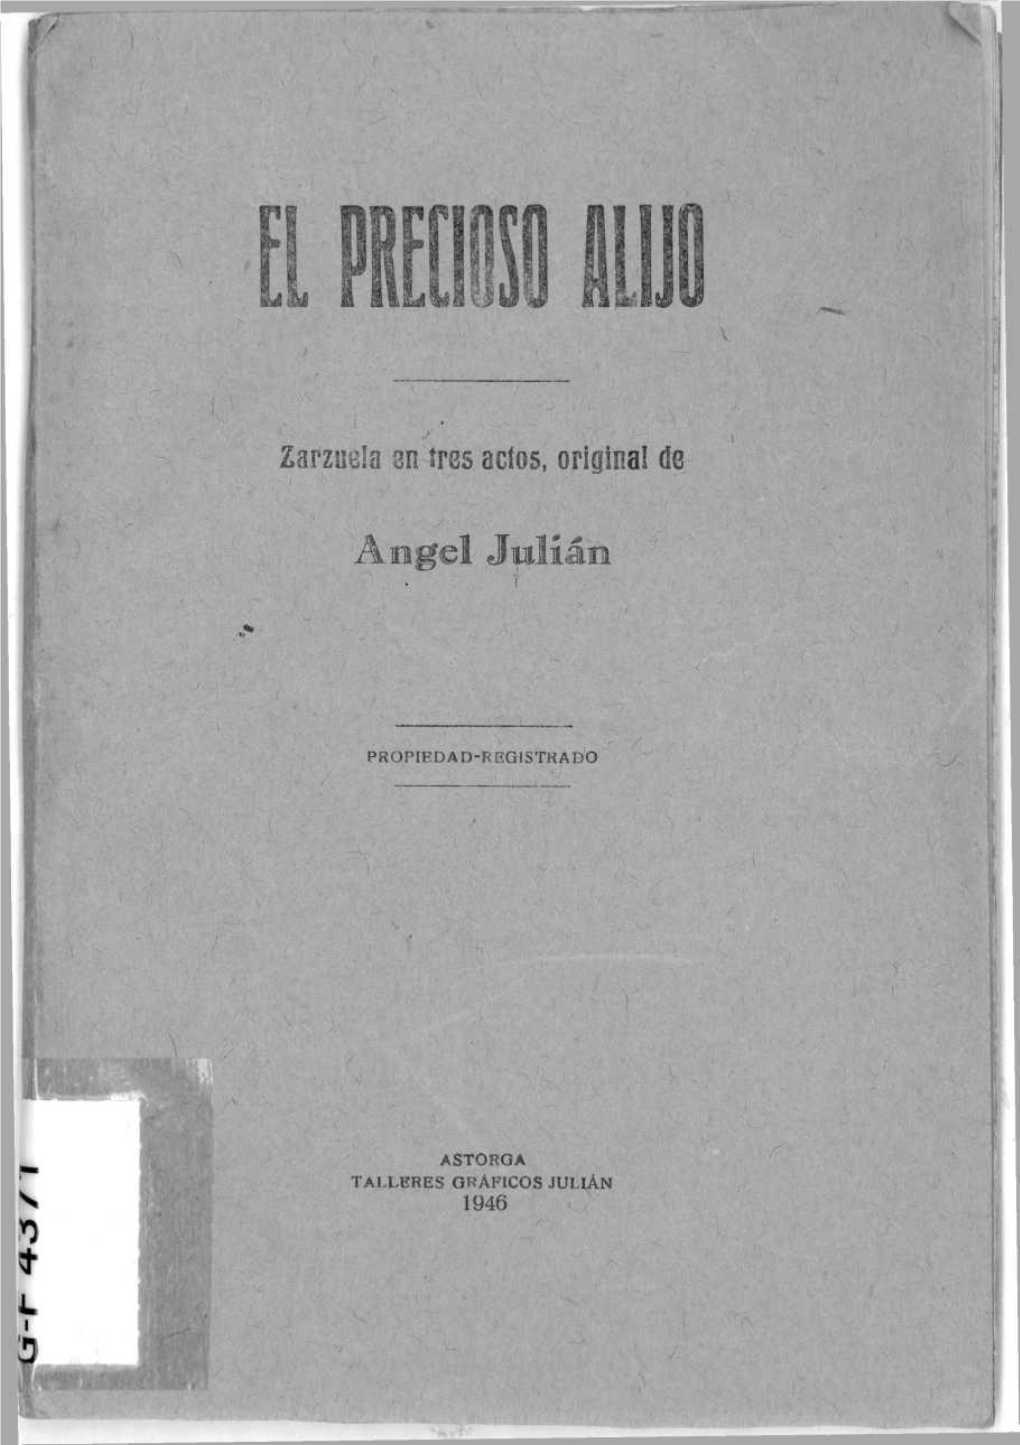 Zarzuela M Tres Actos, Origma! De Angel Julián